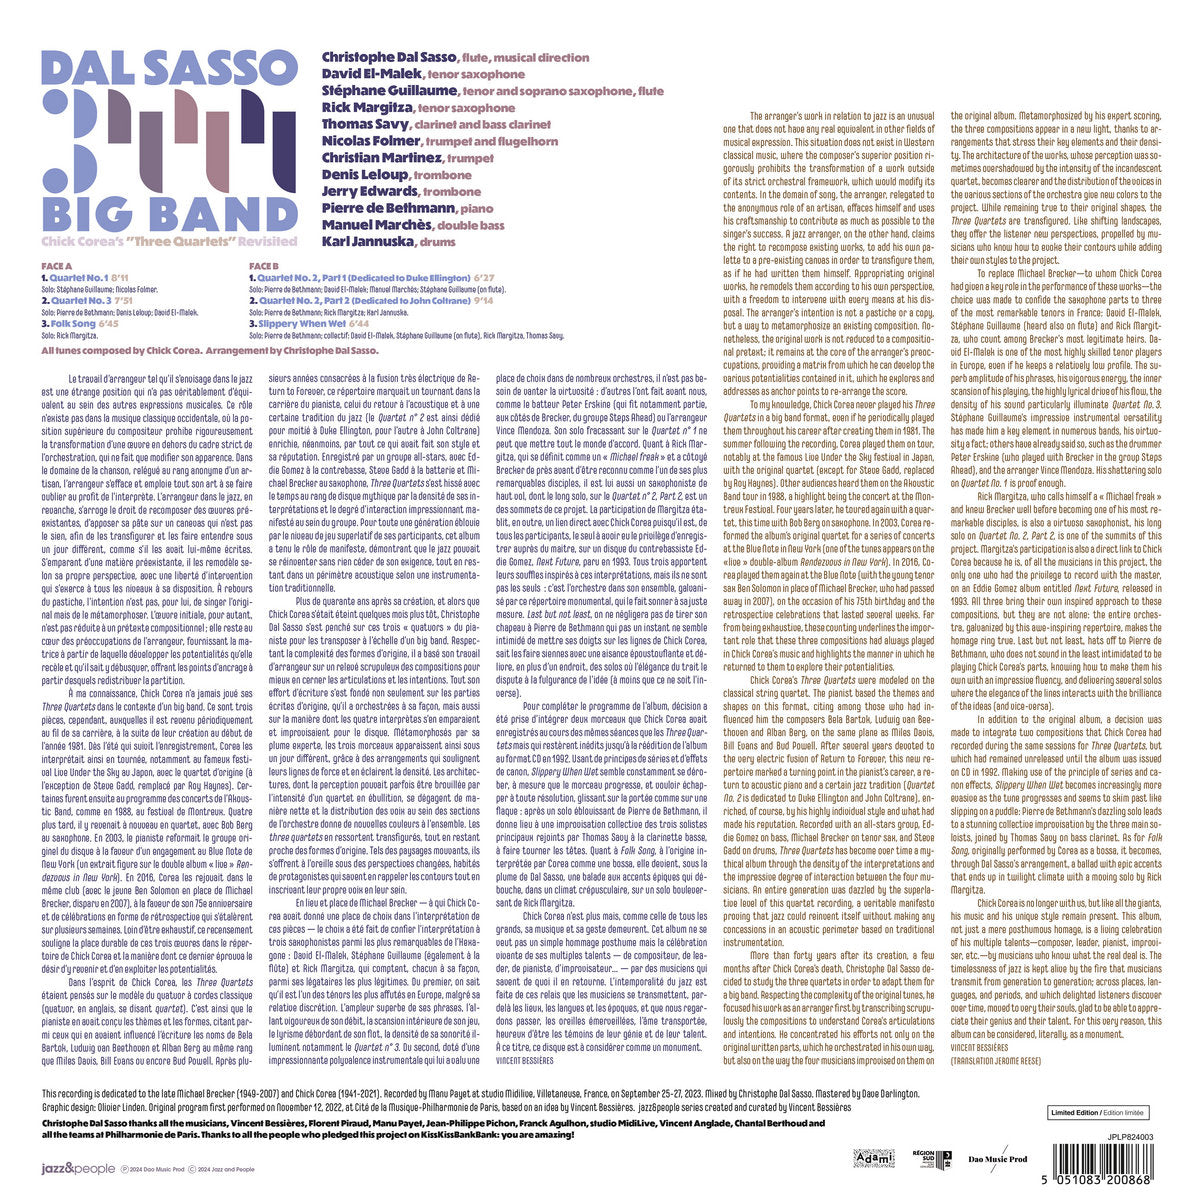 DAL SASSO BIG BAND & CHRISTOPHE DAL SASSO - Chick Corea: Three Quartets Revisited - LP - Vinyl [JUN 21]